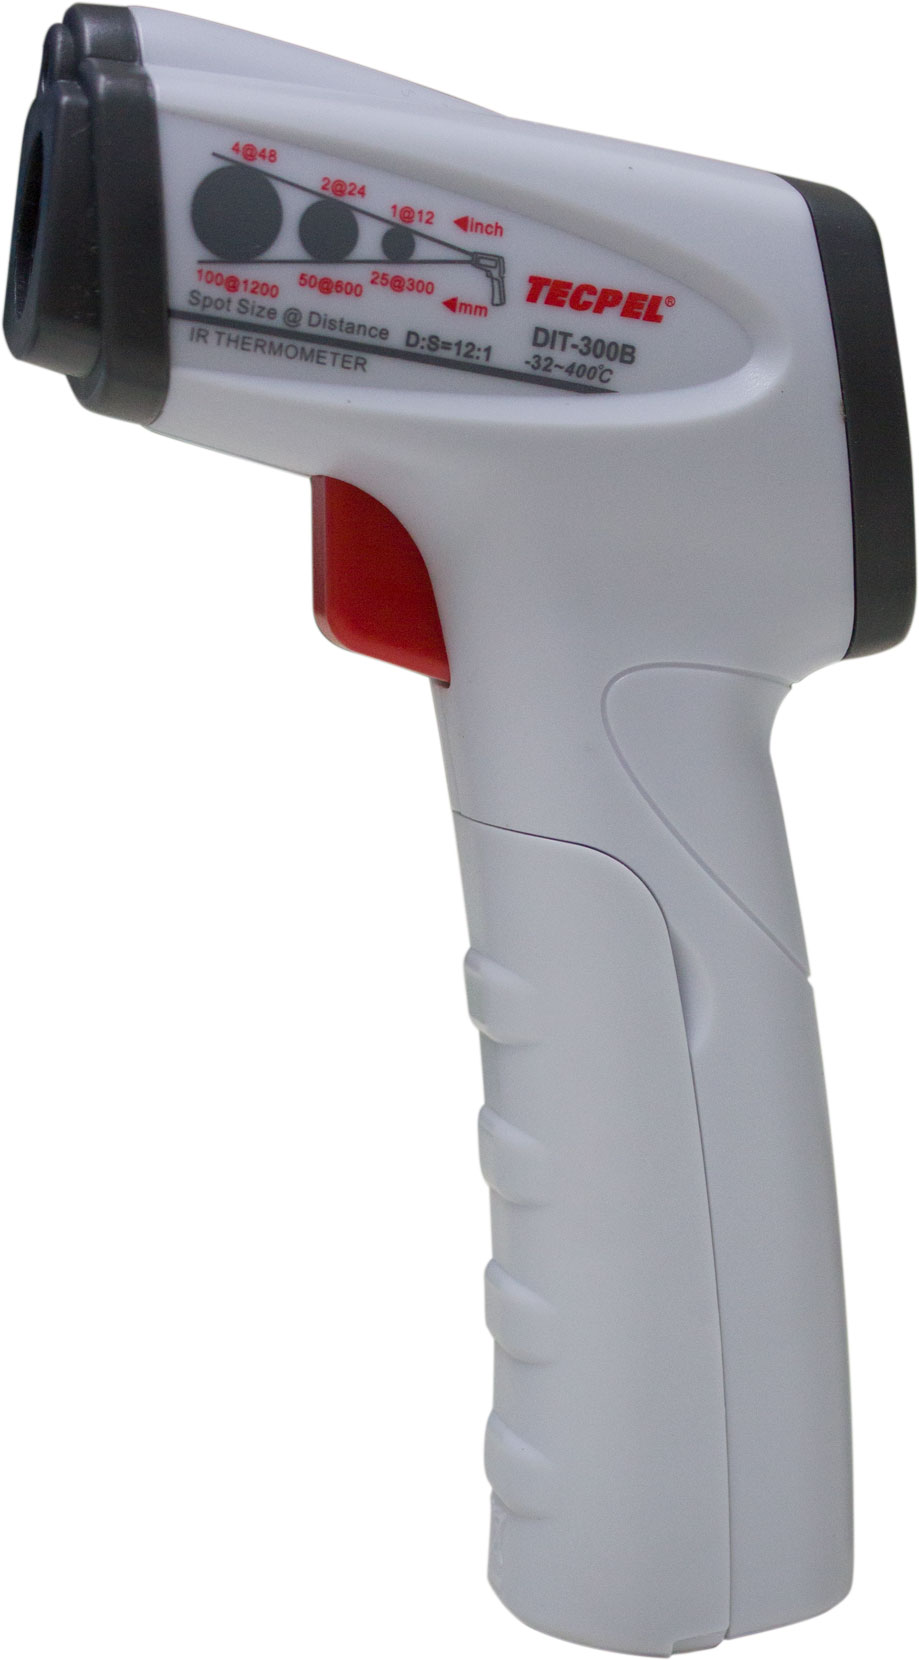 https://tecpel.com/web/upload/DIT-300B-handheld-Infrared-Thermometer.jpg